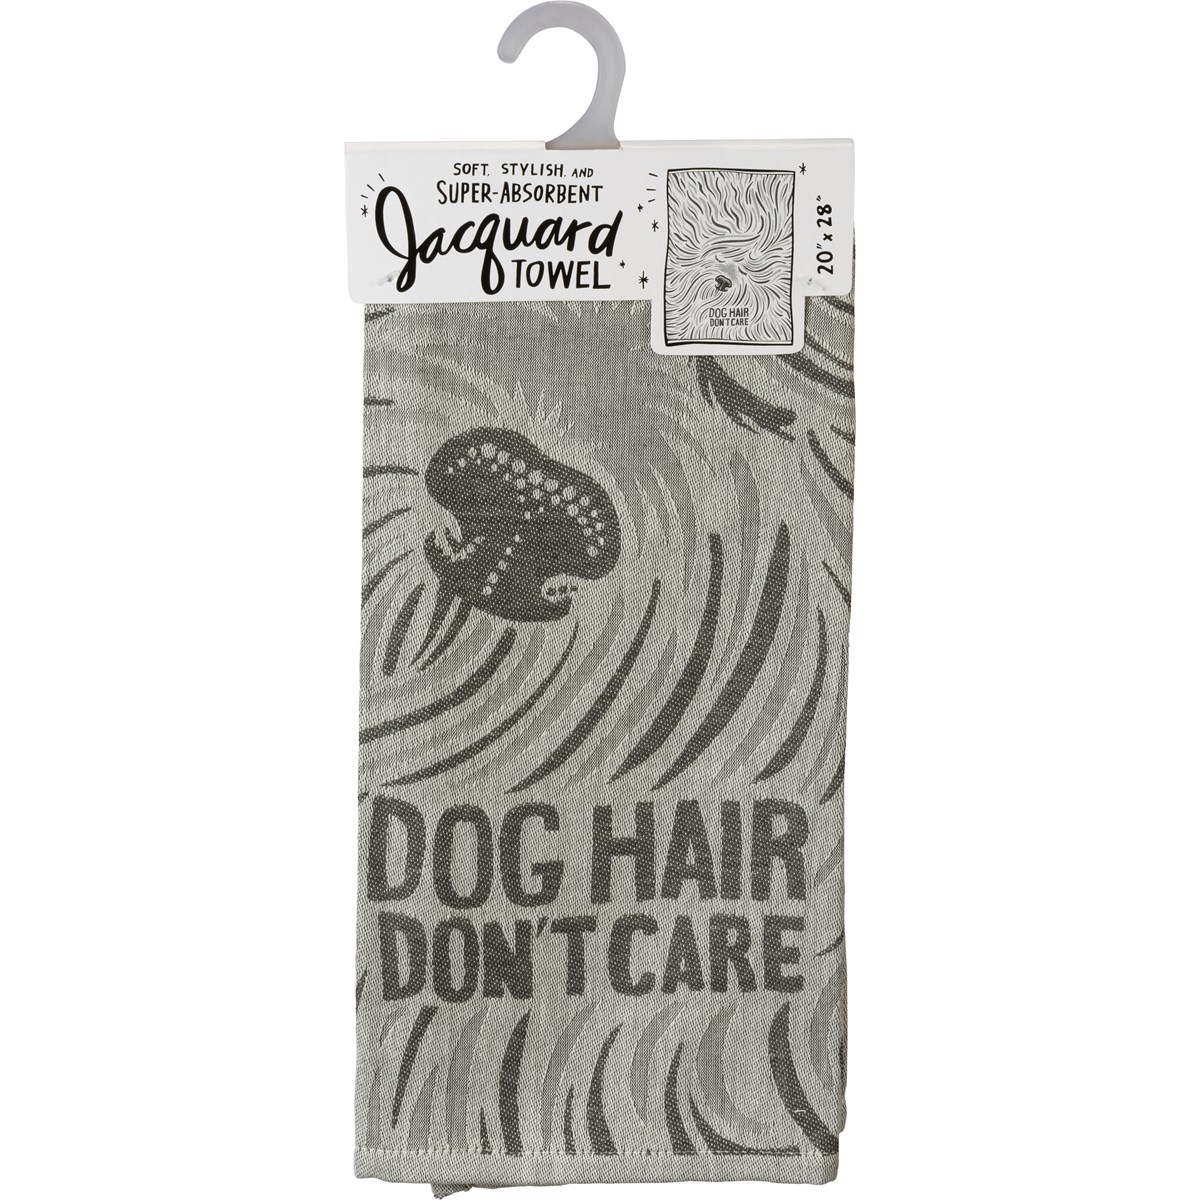 Kitchen Towel - Dog Hair, Don't Care - 20" x 28" - Cotton